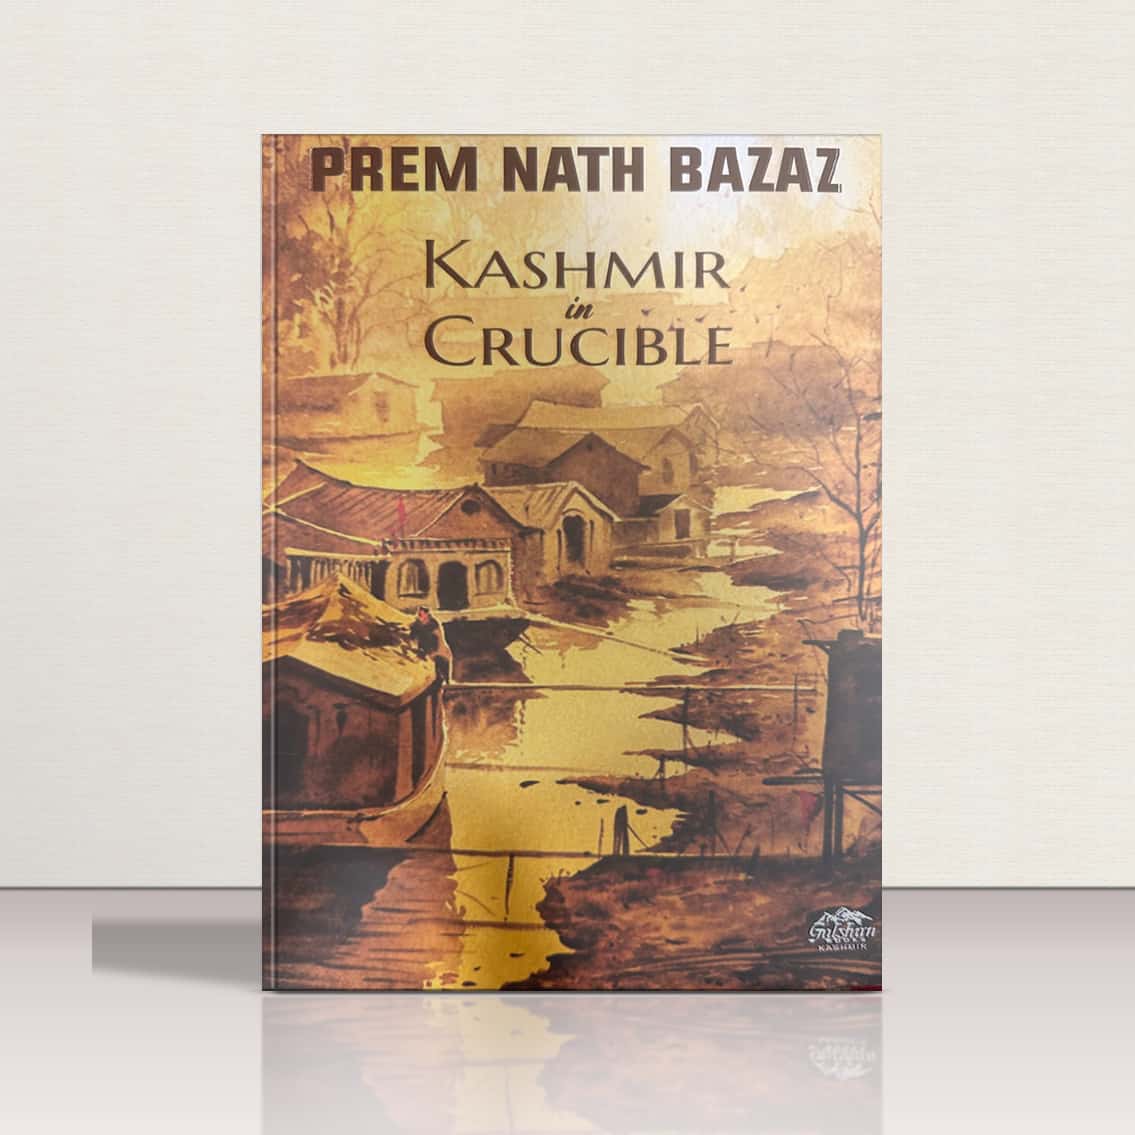 Kashmir in Crucible by P.N Bazaz